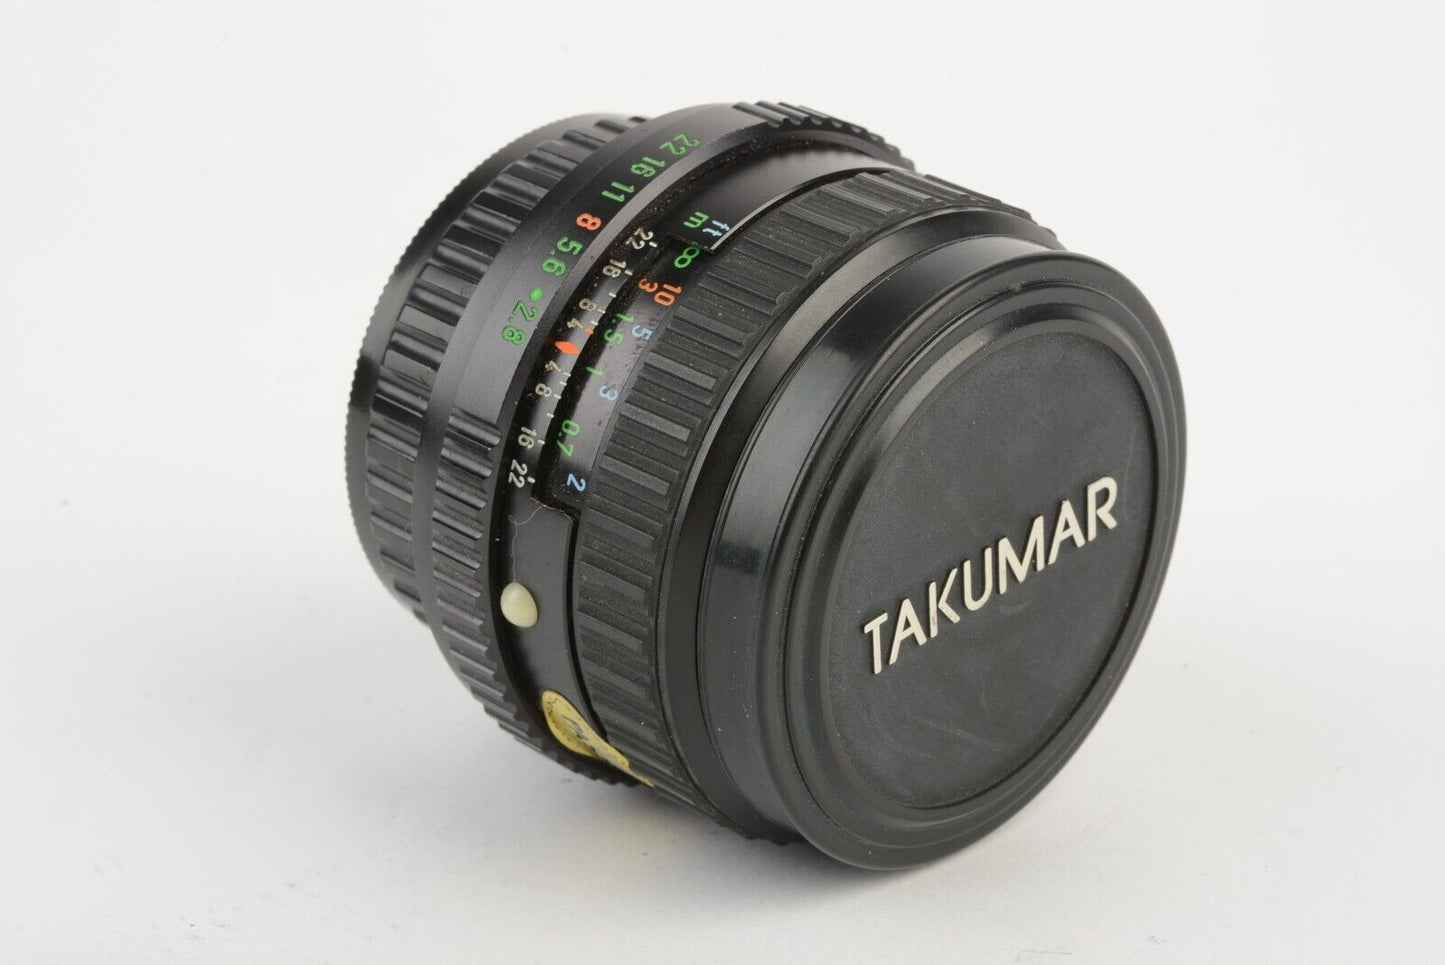 MINT- PENTAX TAKUMAR 28mm f2.8MF WIDE ANGLE LENS, CAPS+POUCH, NICE!